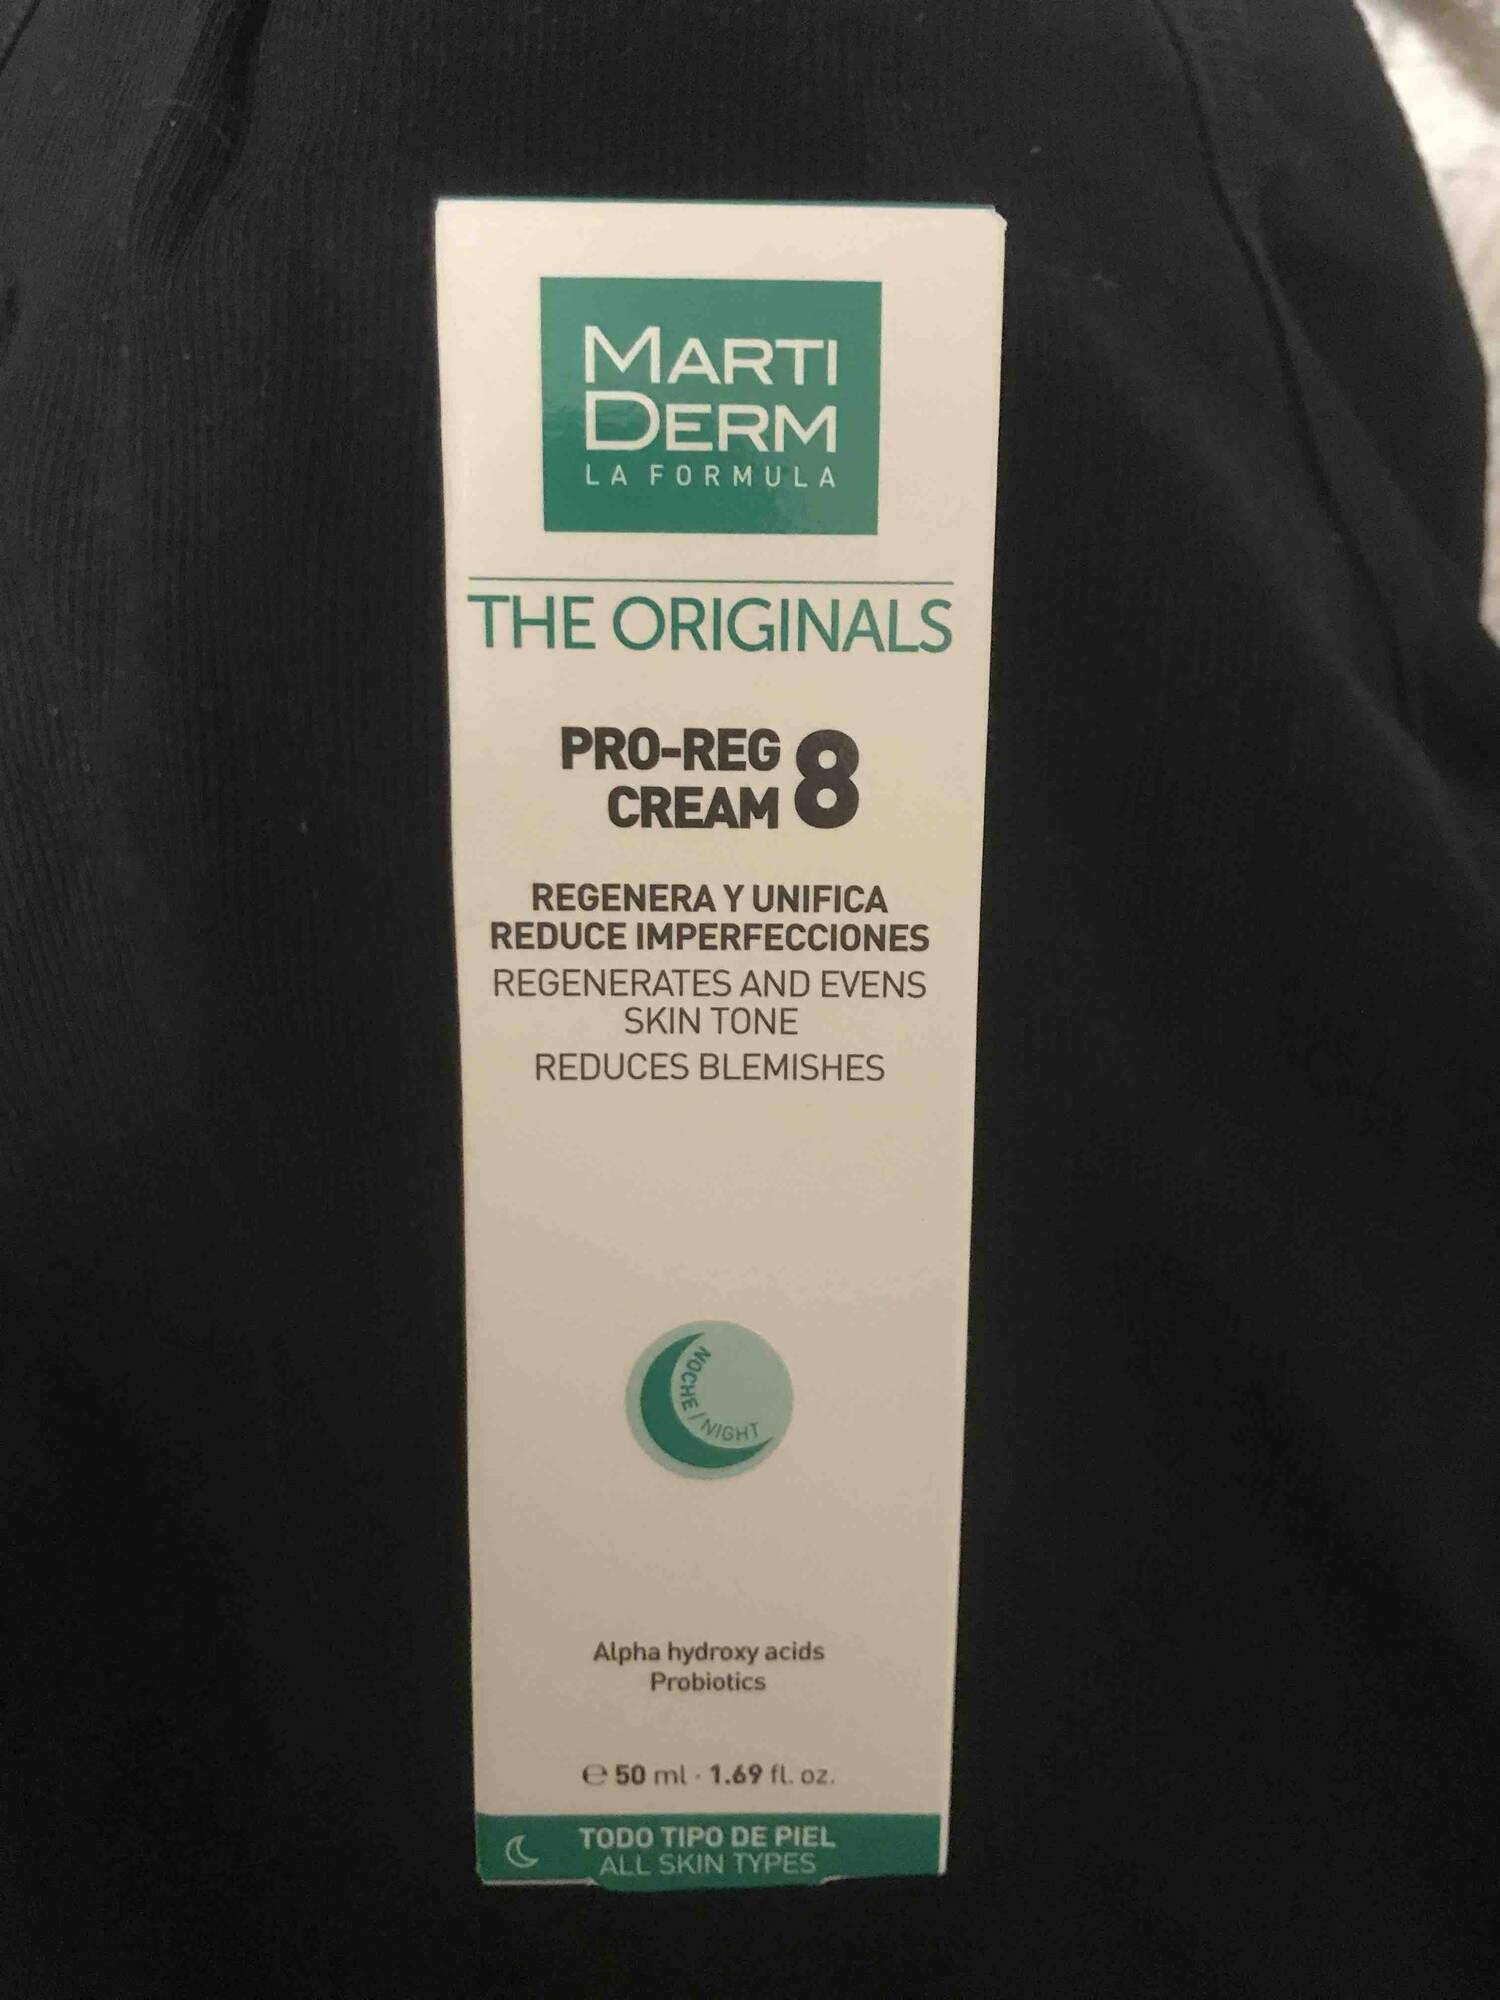 MARTIDERM - The originals - Pro-reg cream 8 